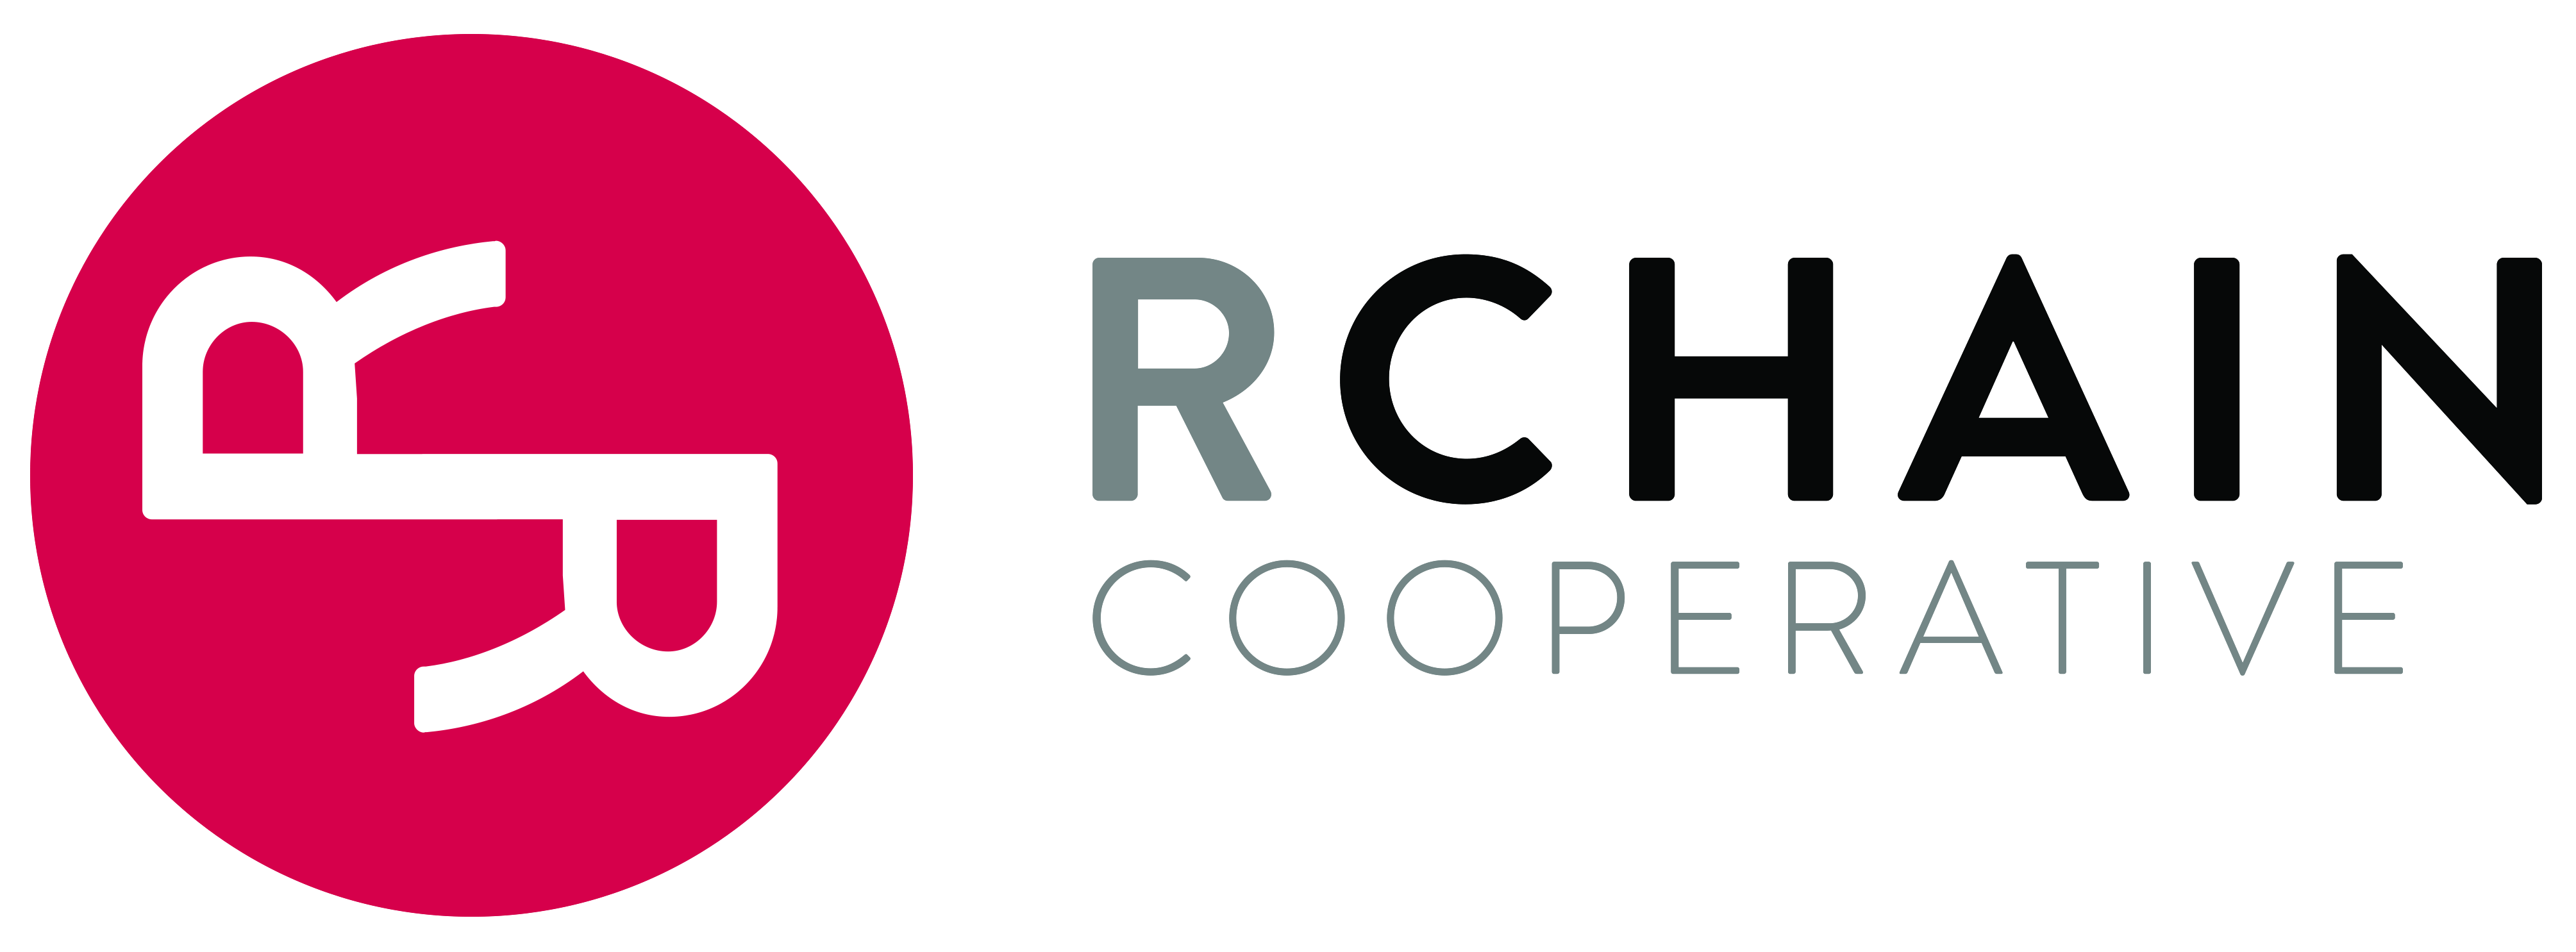 Rchain Logo - Rchain Cooperative | CoinGecko